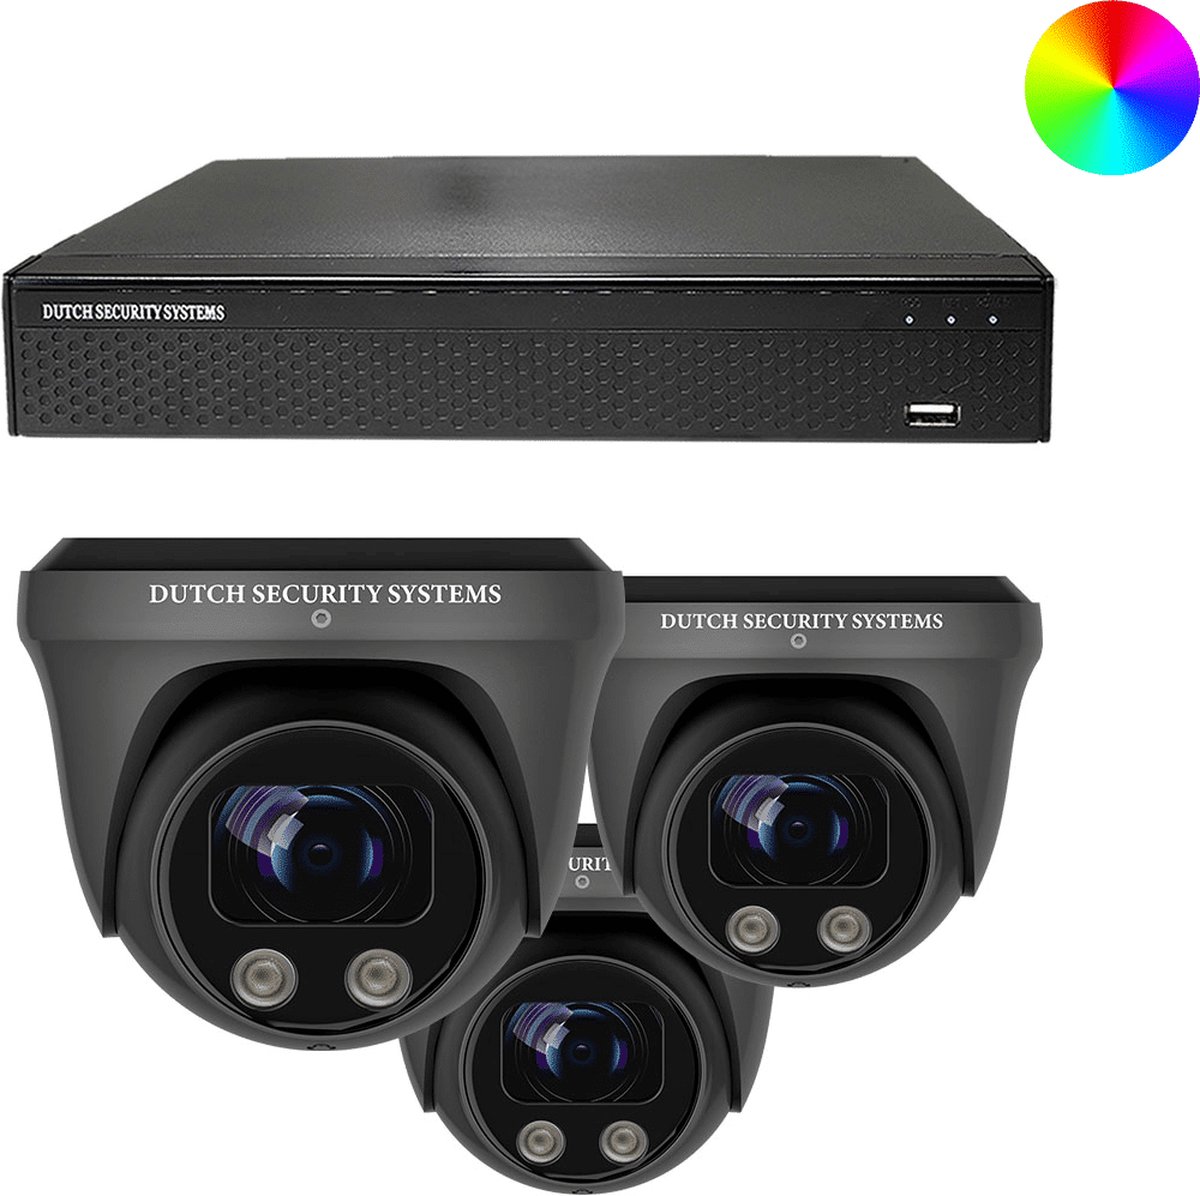 Beveiligingscamera Full Color 4K Ultra HD - Sony 8MP - Set 3x Dome - Zwart - Buiten & Binnen - Met Nachtzicht In Kleur - Incl. Recorder & App